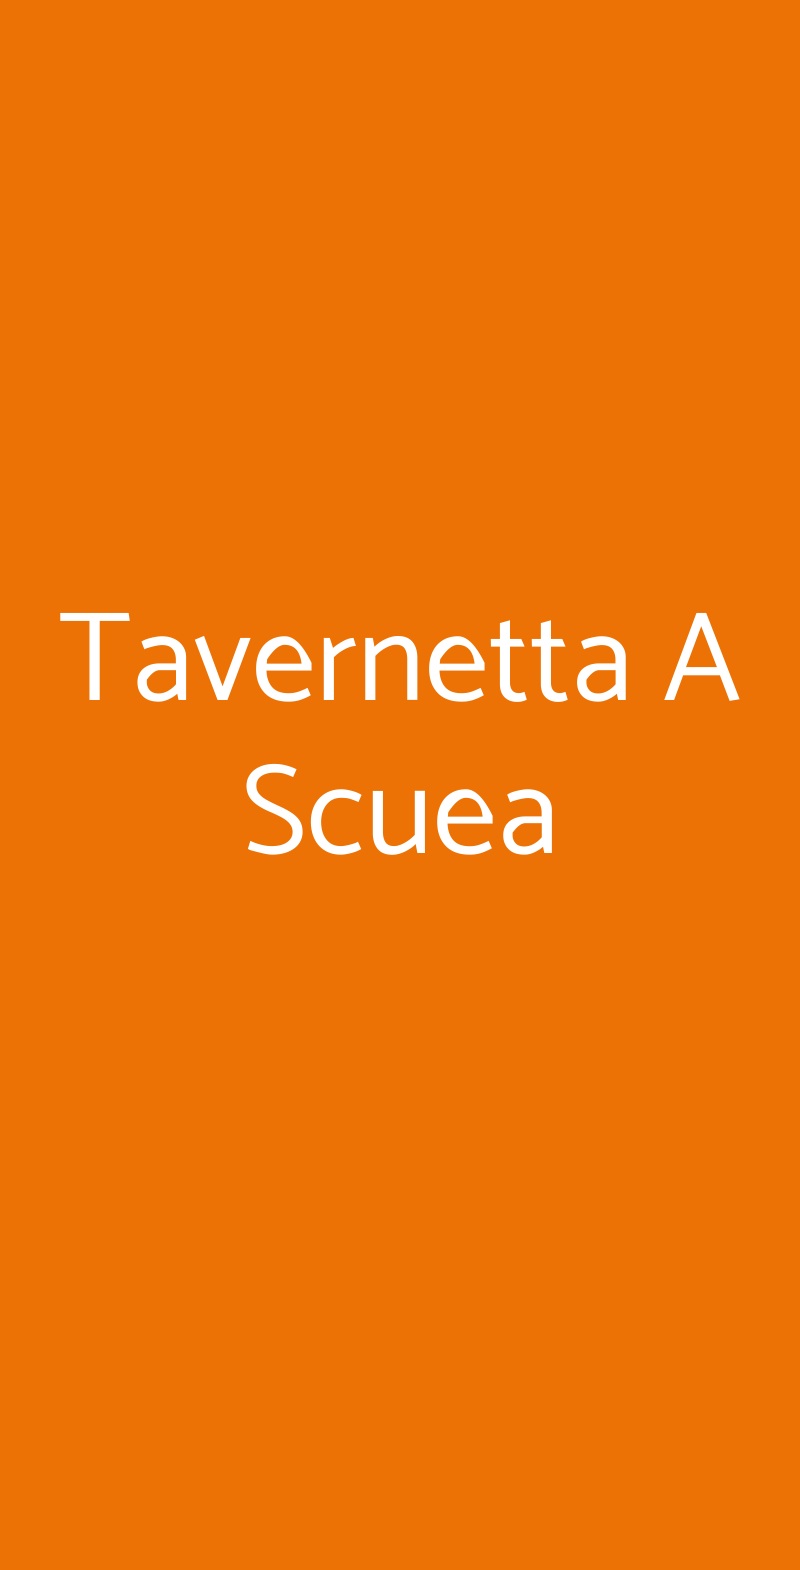 Tavernetta A Scuea Mestre menù 1 pagina